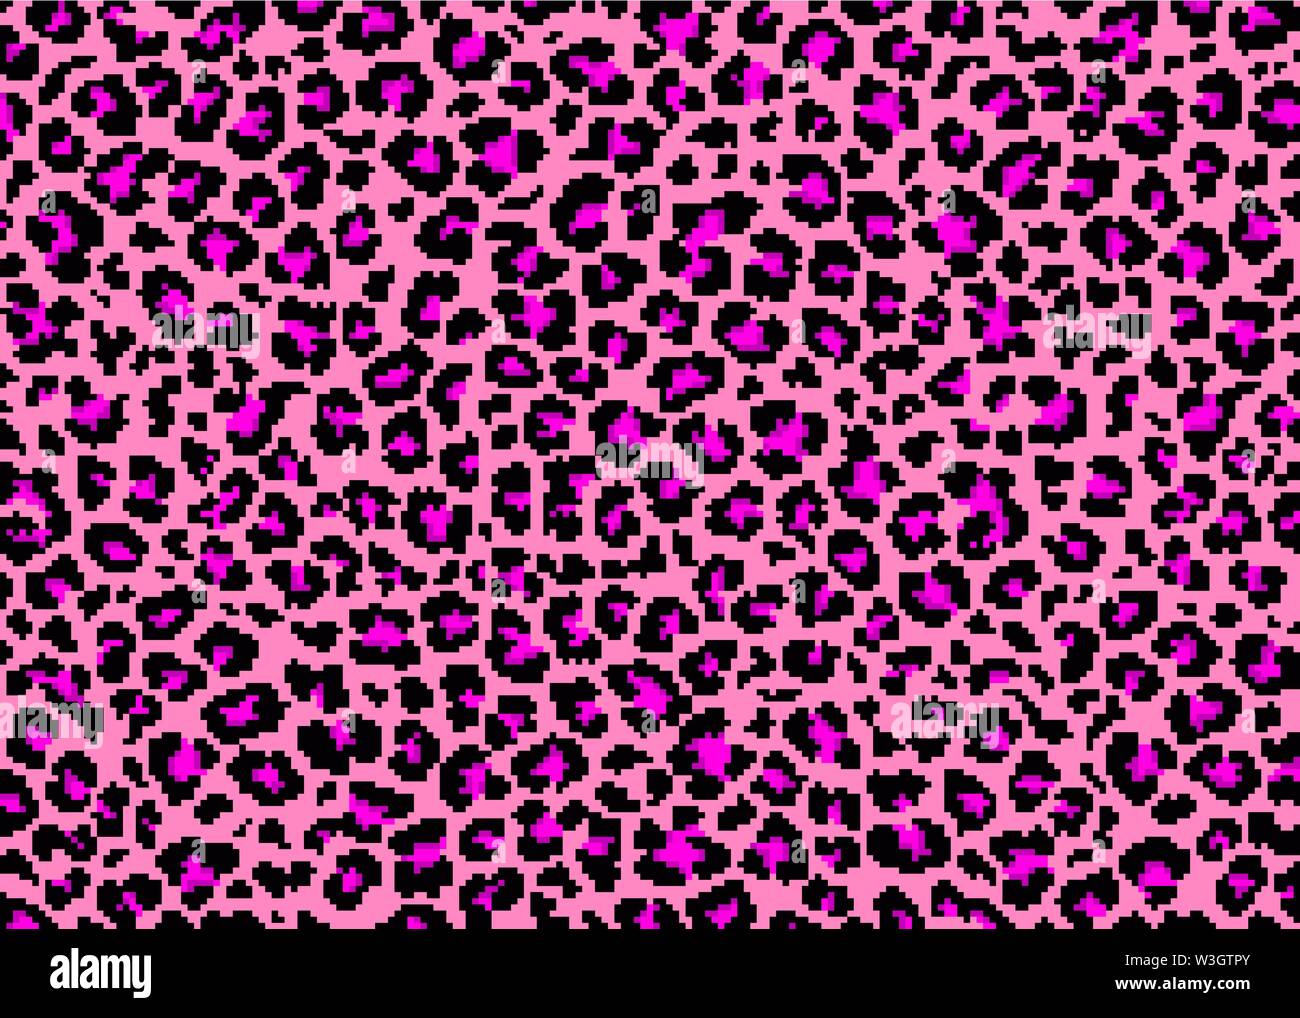 Leopard pattern design. 8 bit vector illustration background. For print, textile, web, home decor, fashion, surface, graphic design Stock Vector